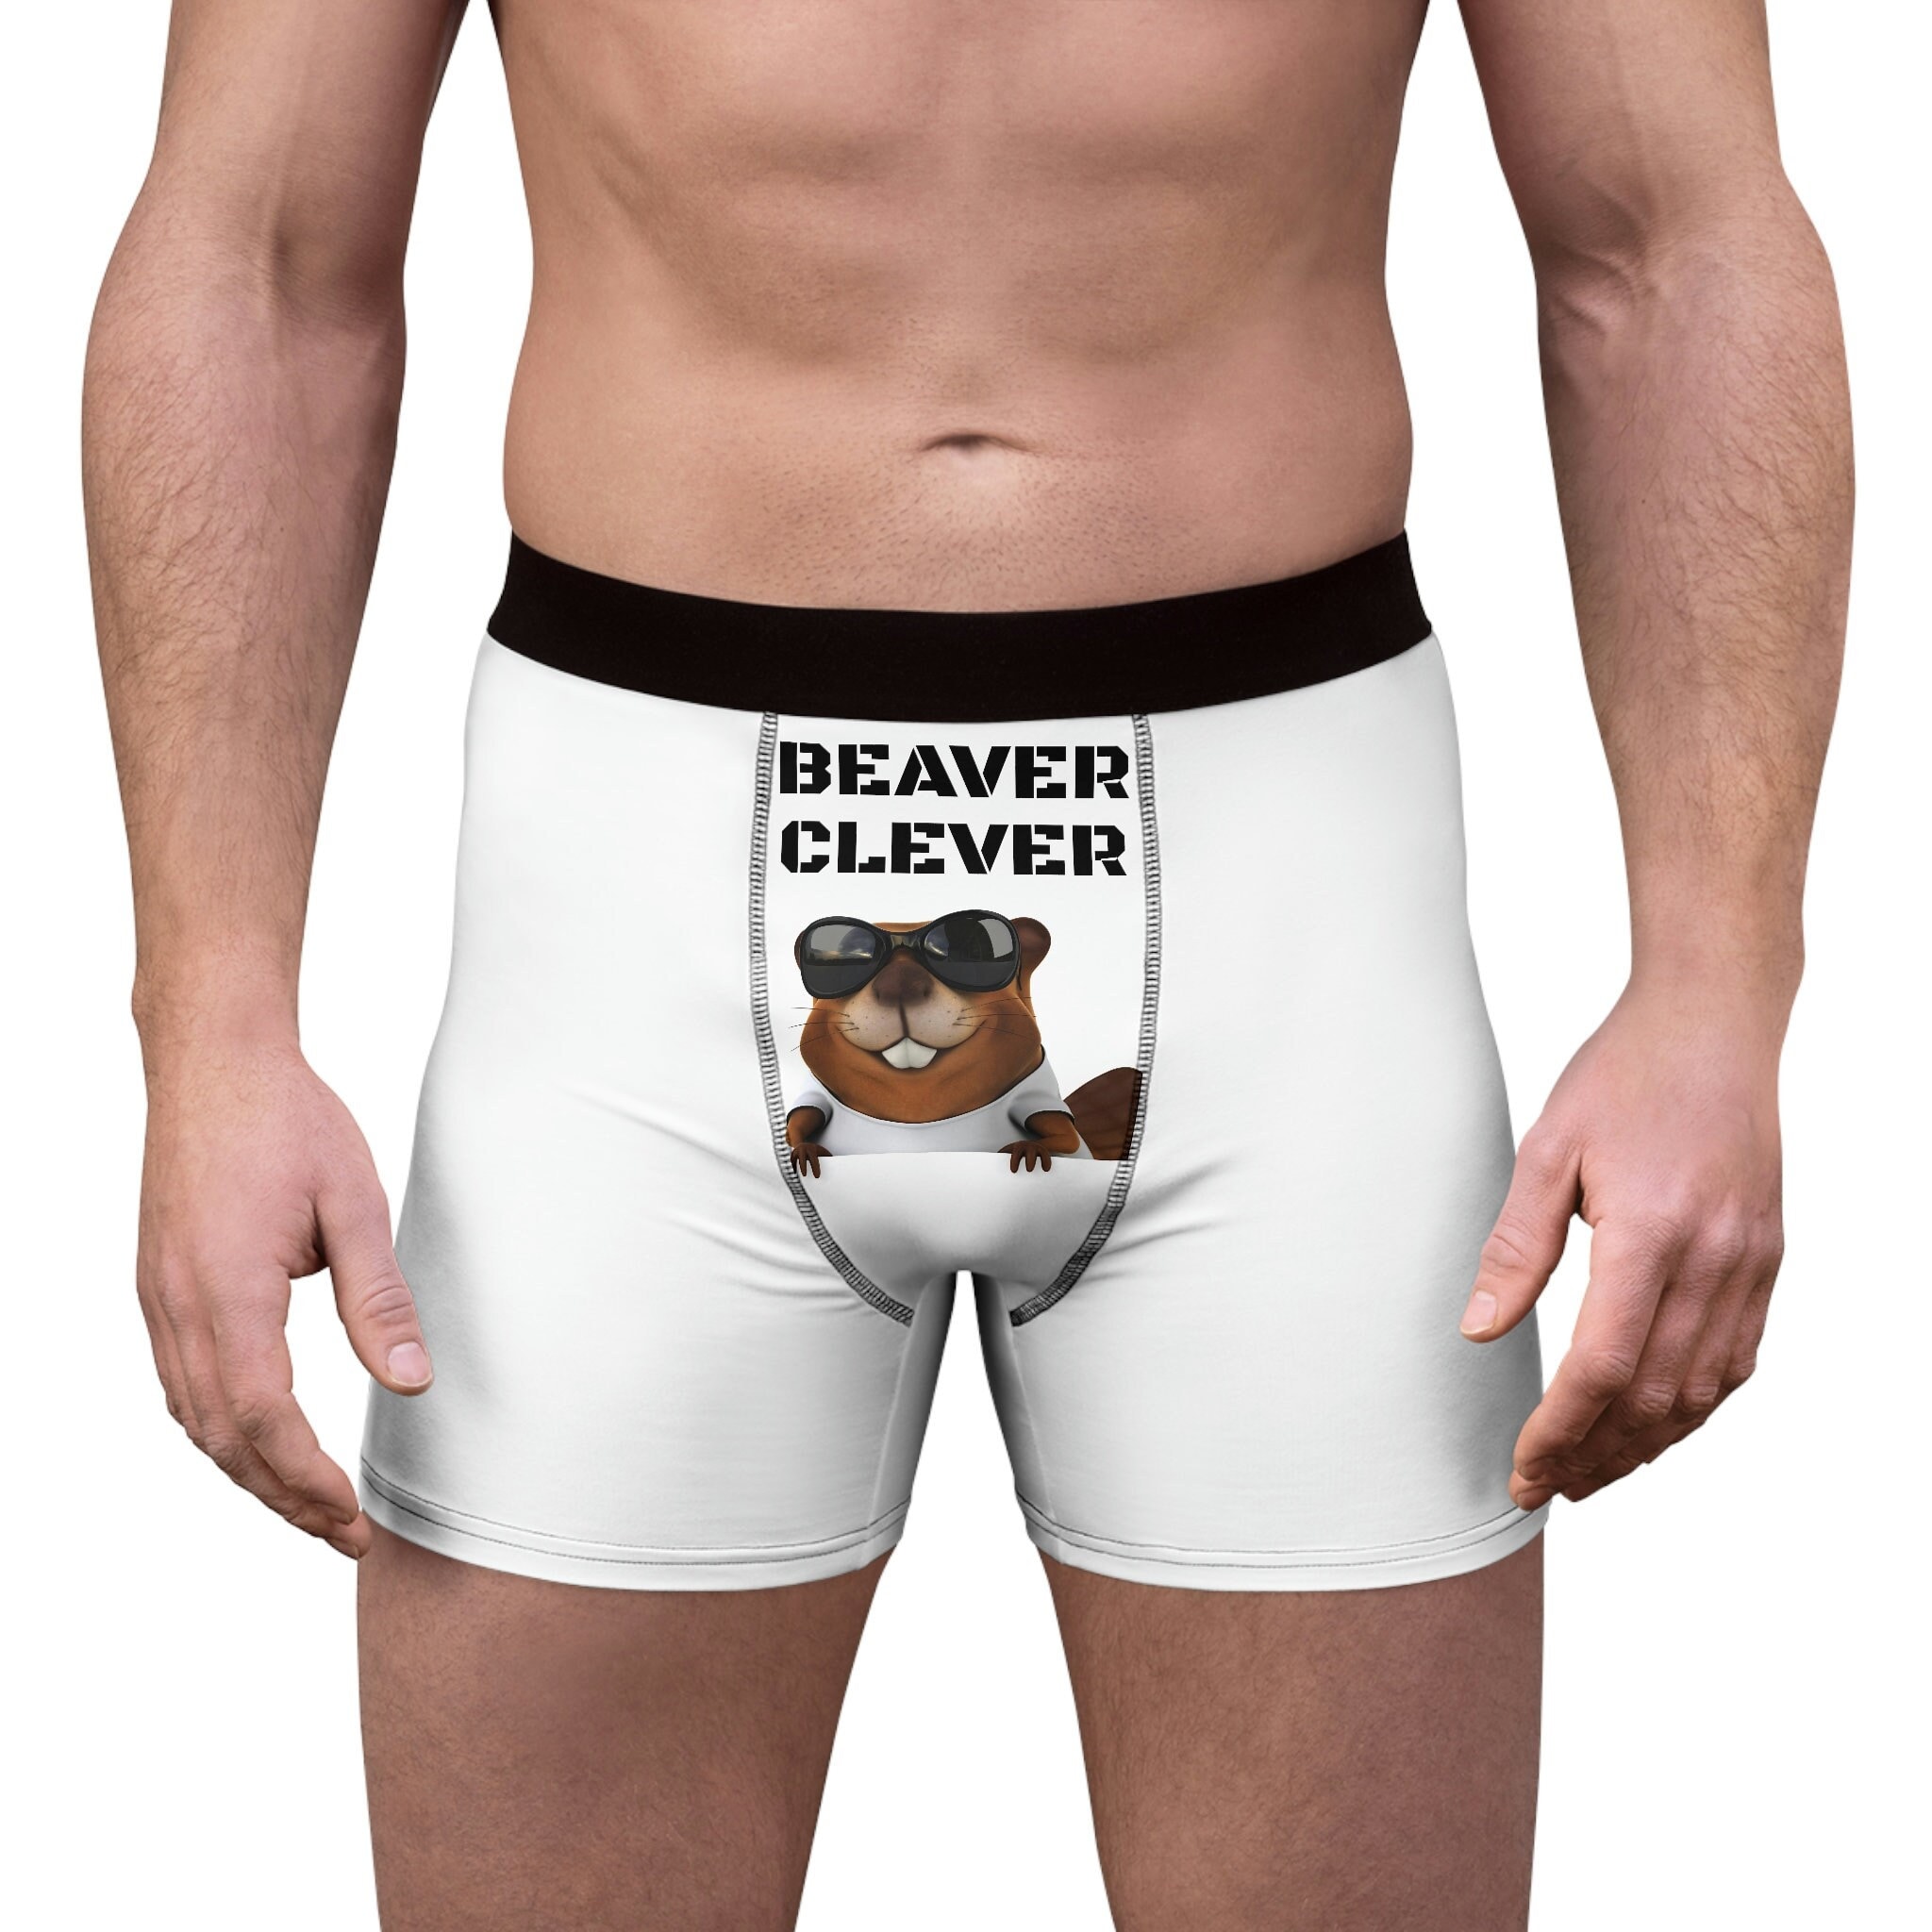 Beaver Clever, Men's Boxer Briefs, Gag Gift, Novelty, Underwear